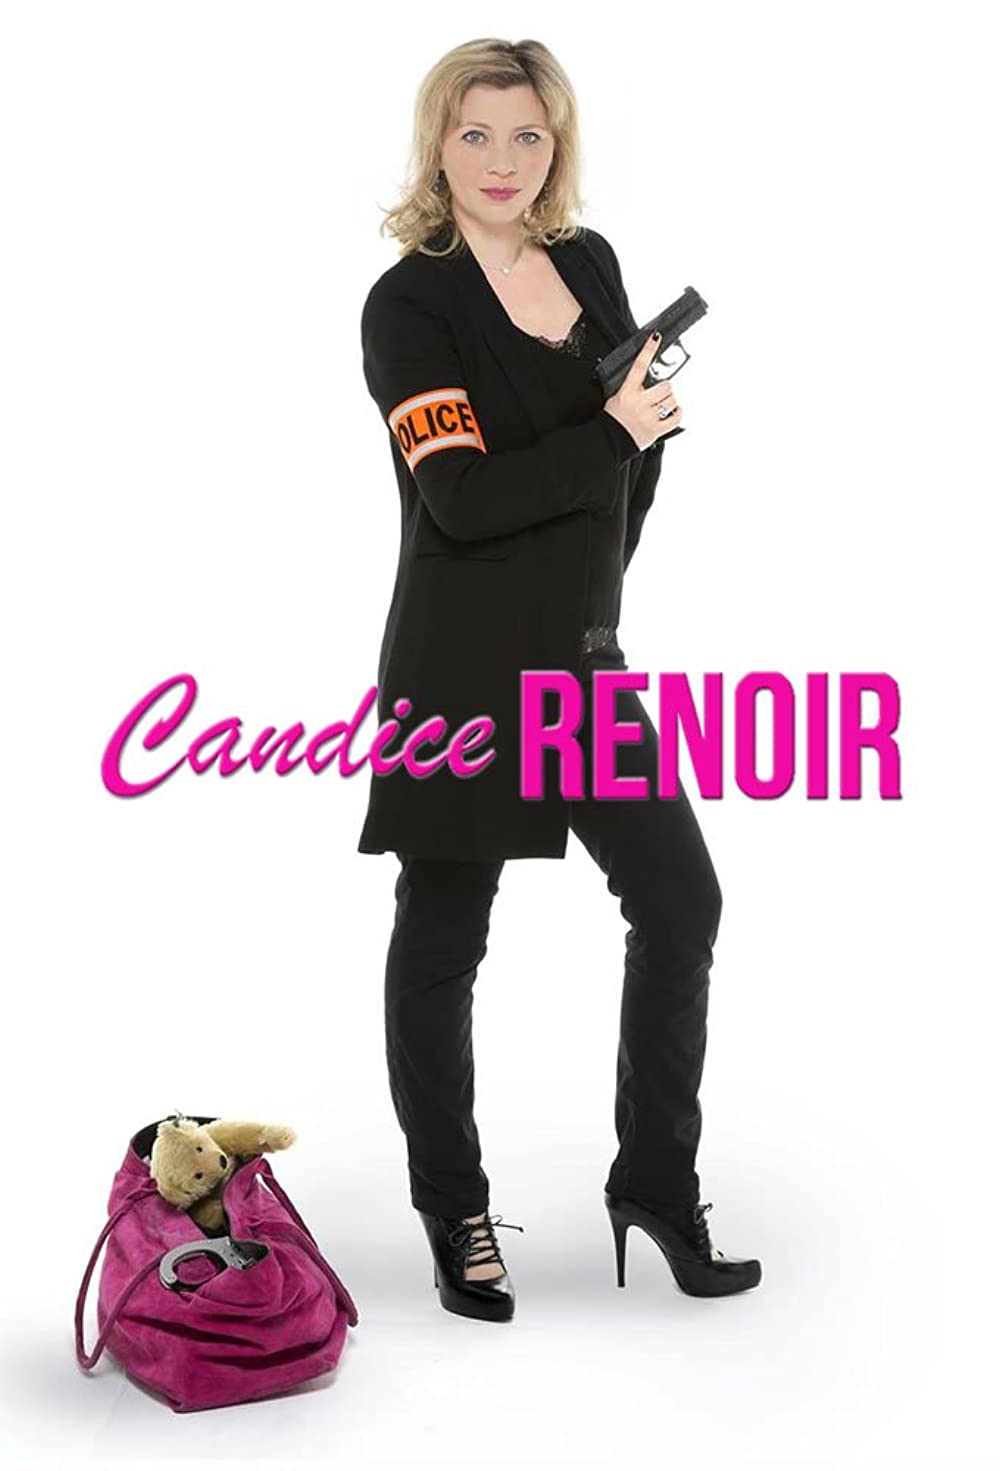 Caratula de Candice Renoir (Candice Renoir) 